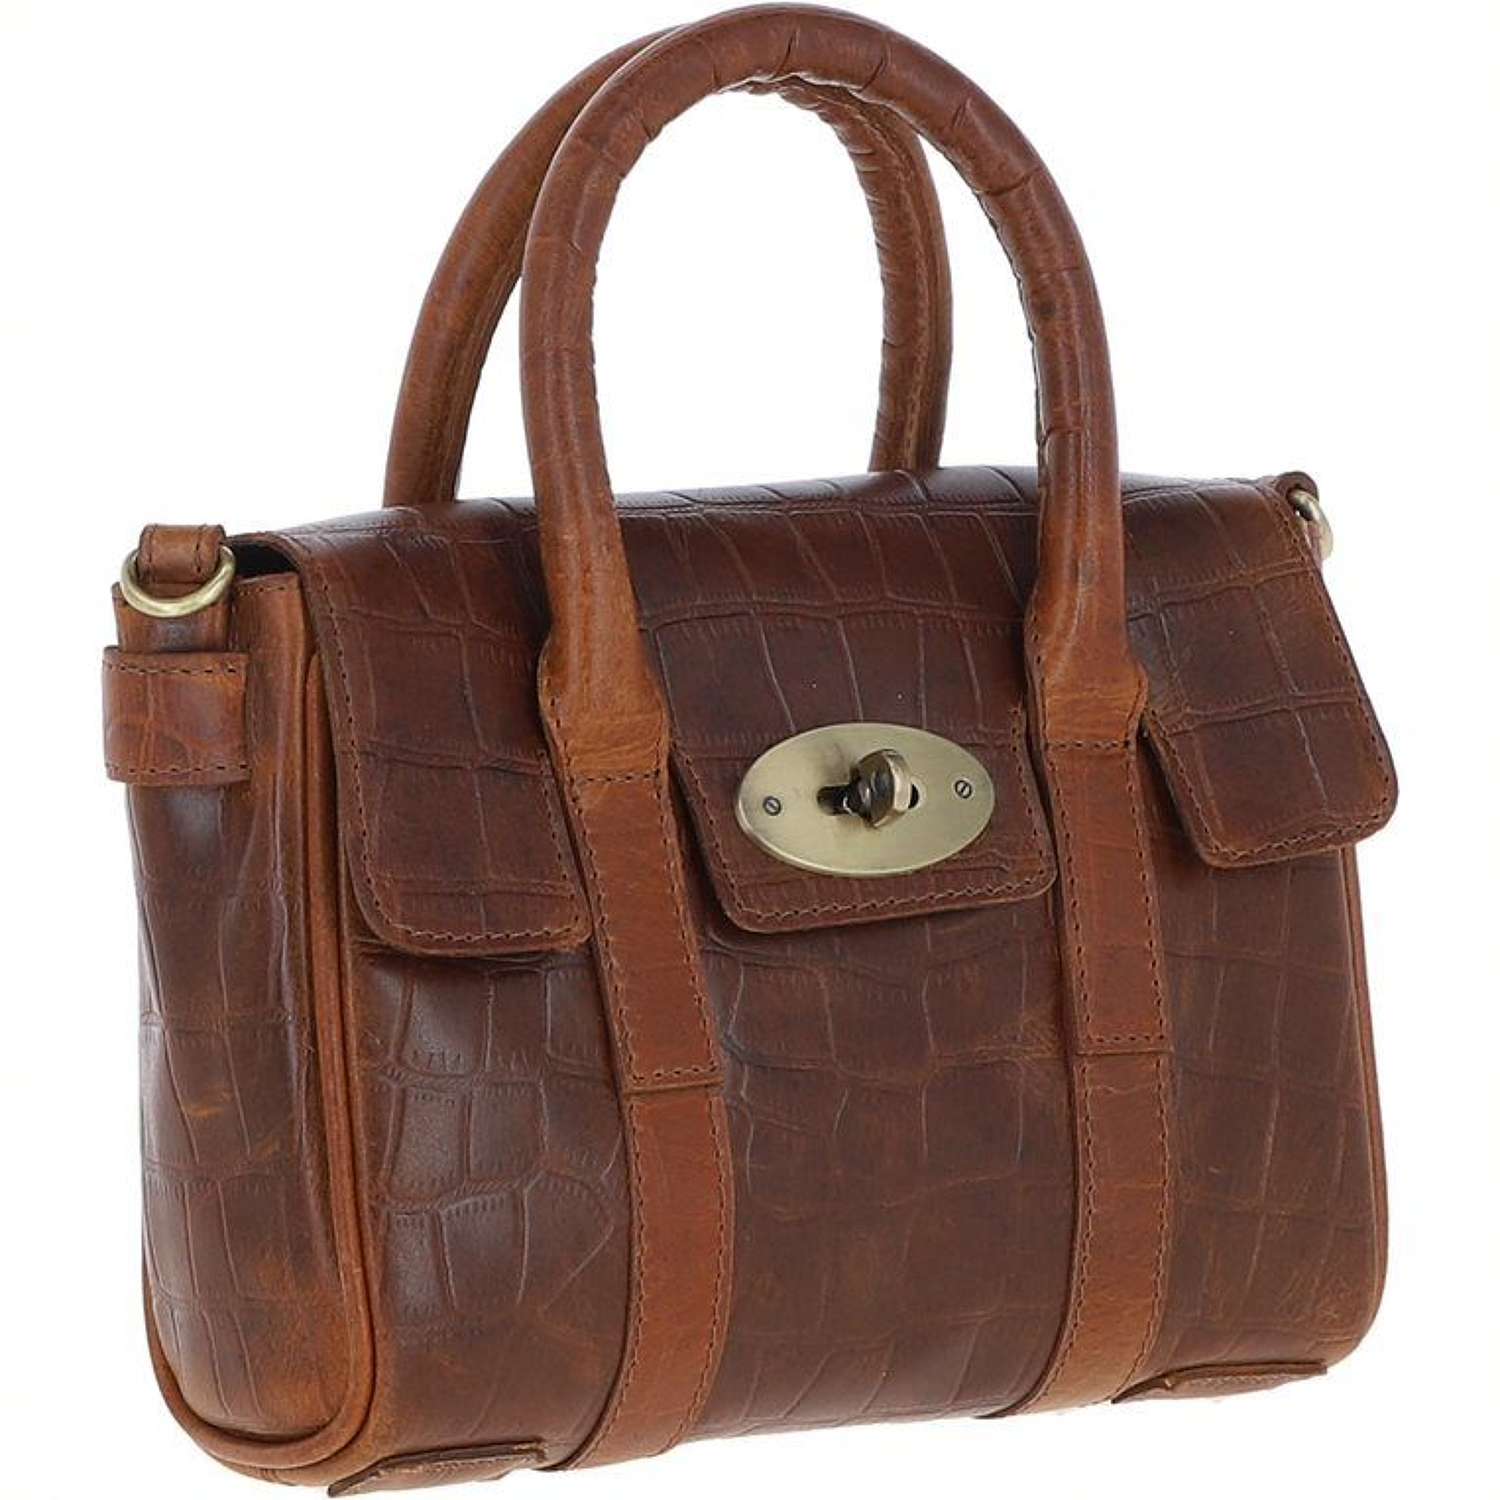 Leather Handbag Cognac - L-73